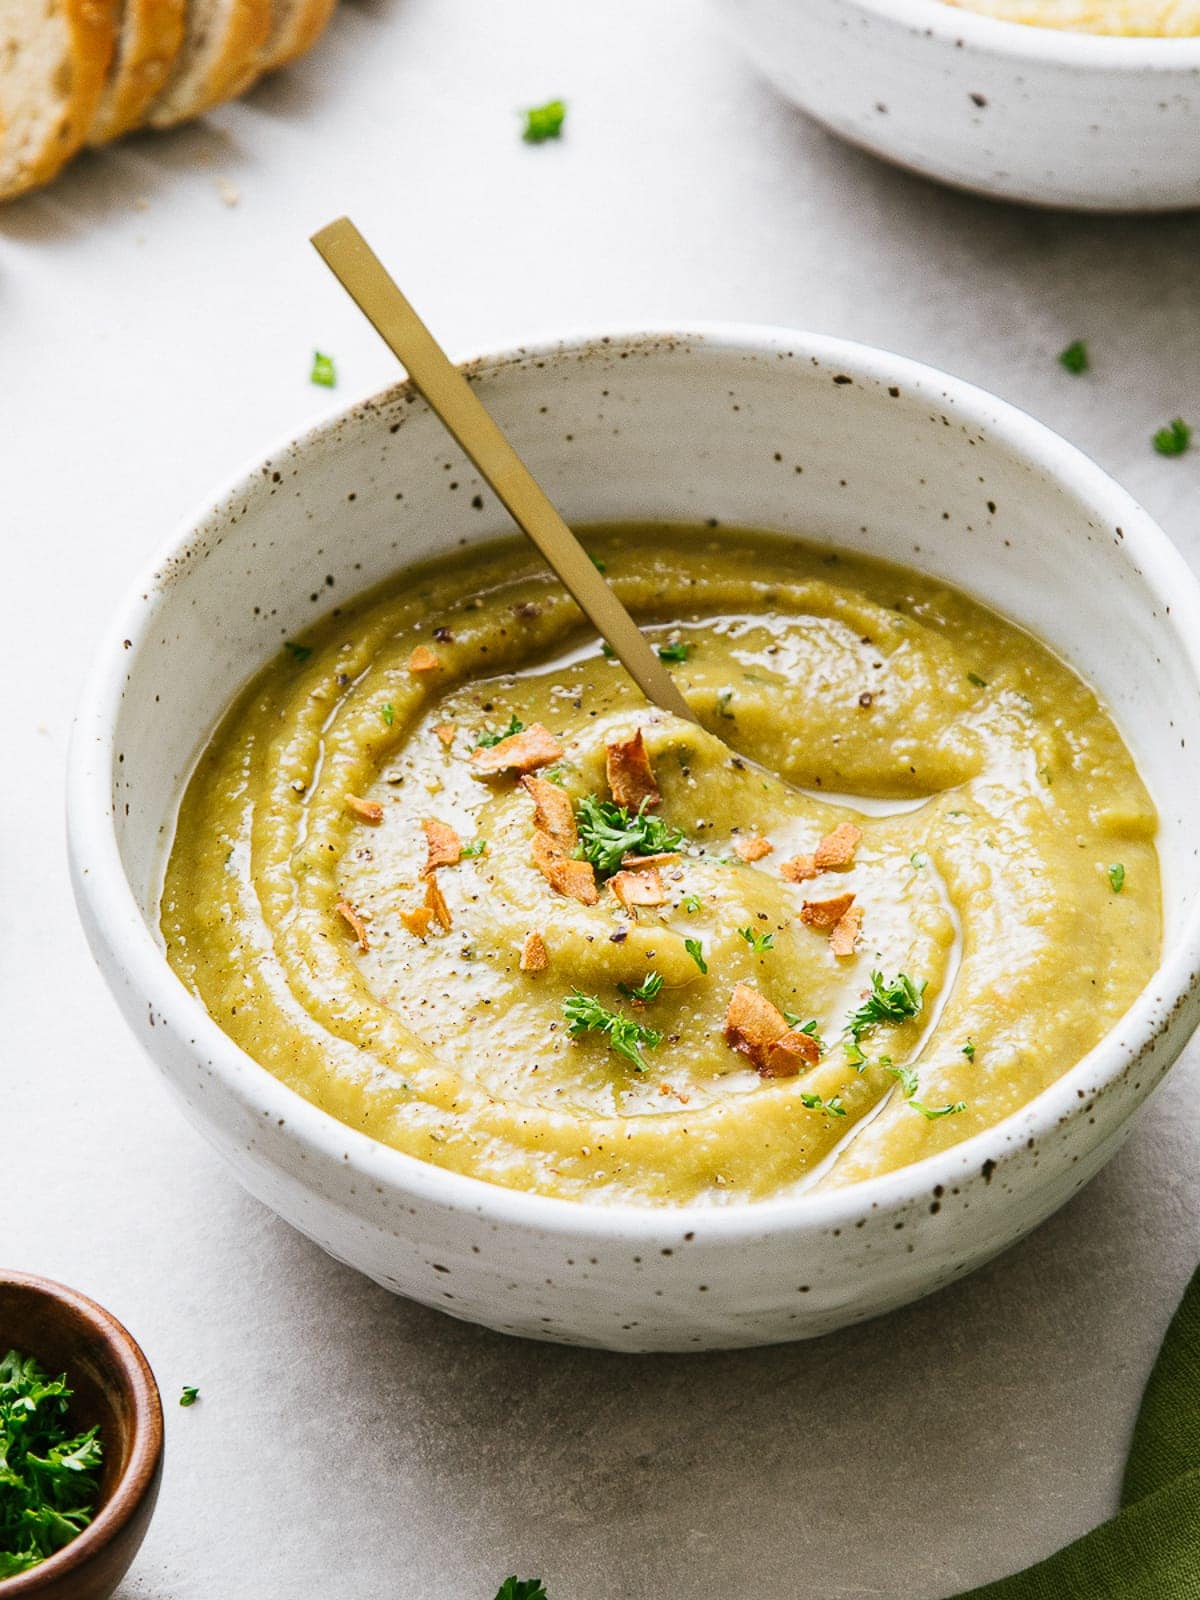 A Very Good Vegan Split Pea Soup - The Simple Veganista